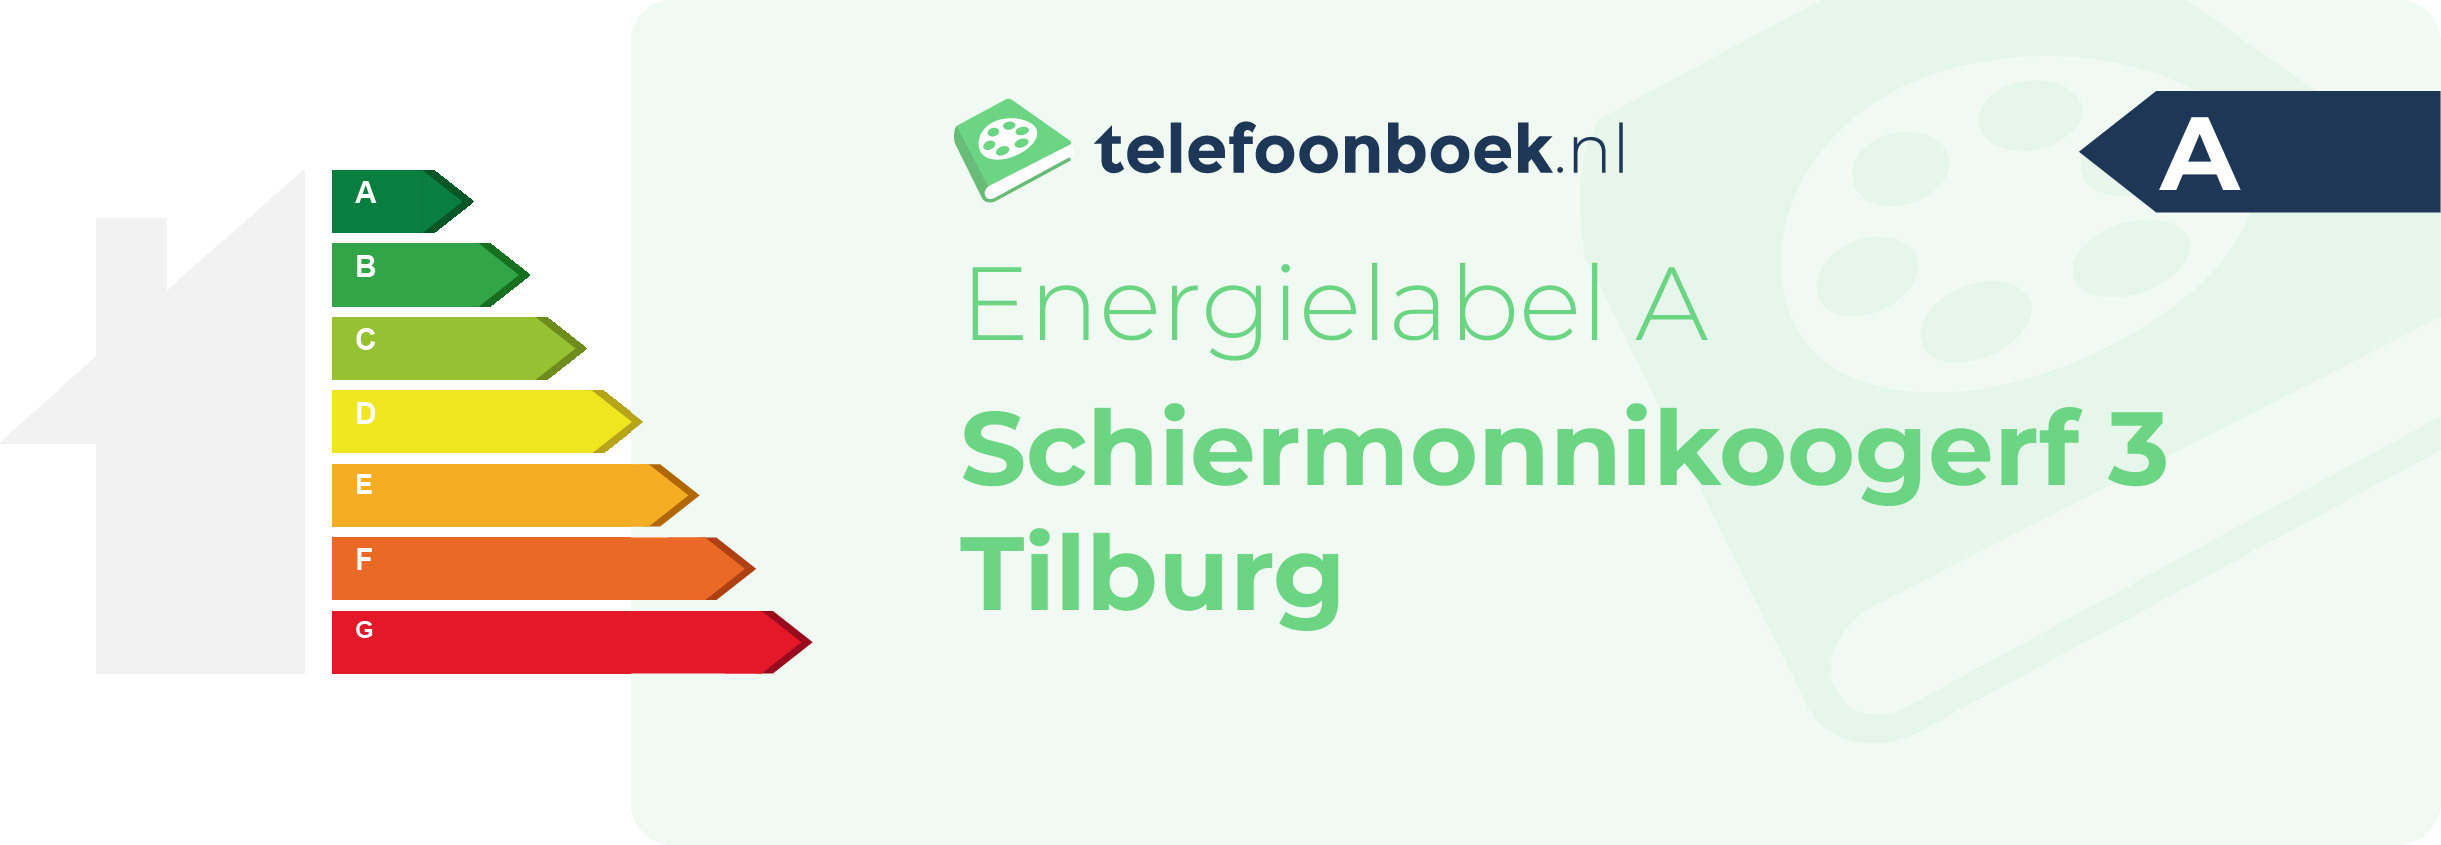 Energielabel Schiermonnikoogerf 3 Tilburg